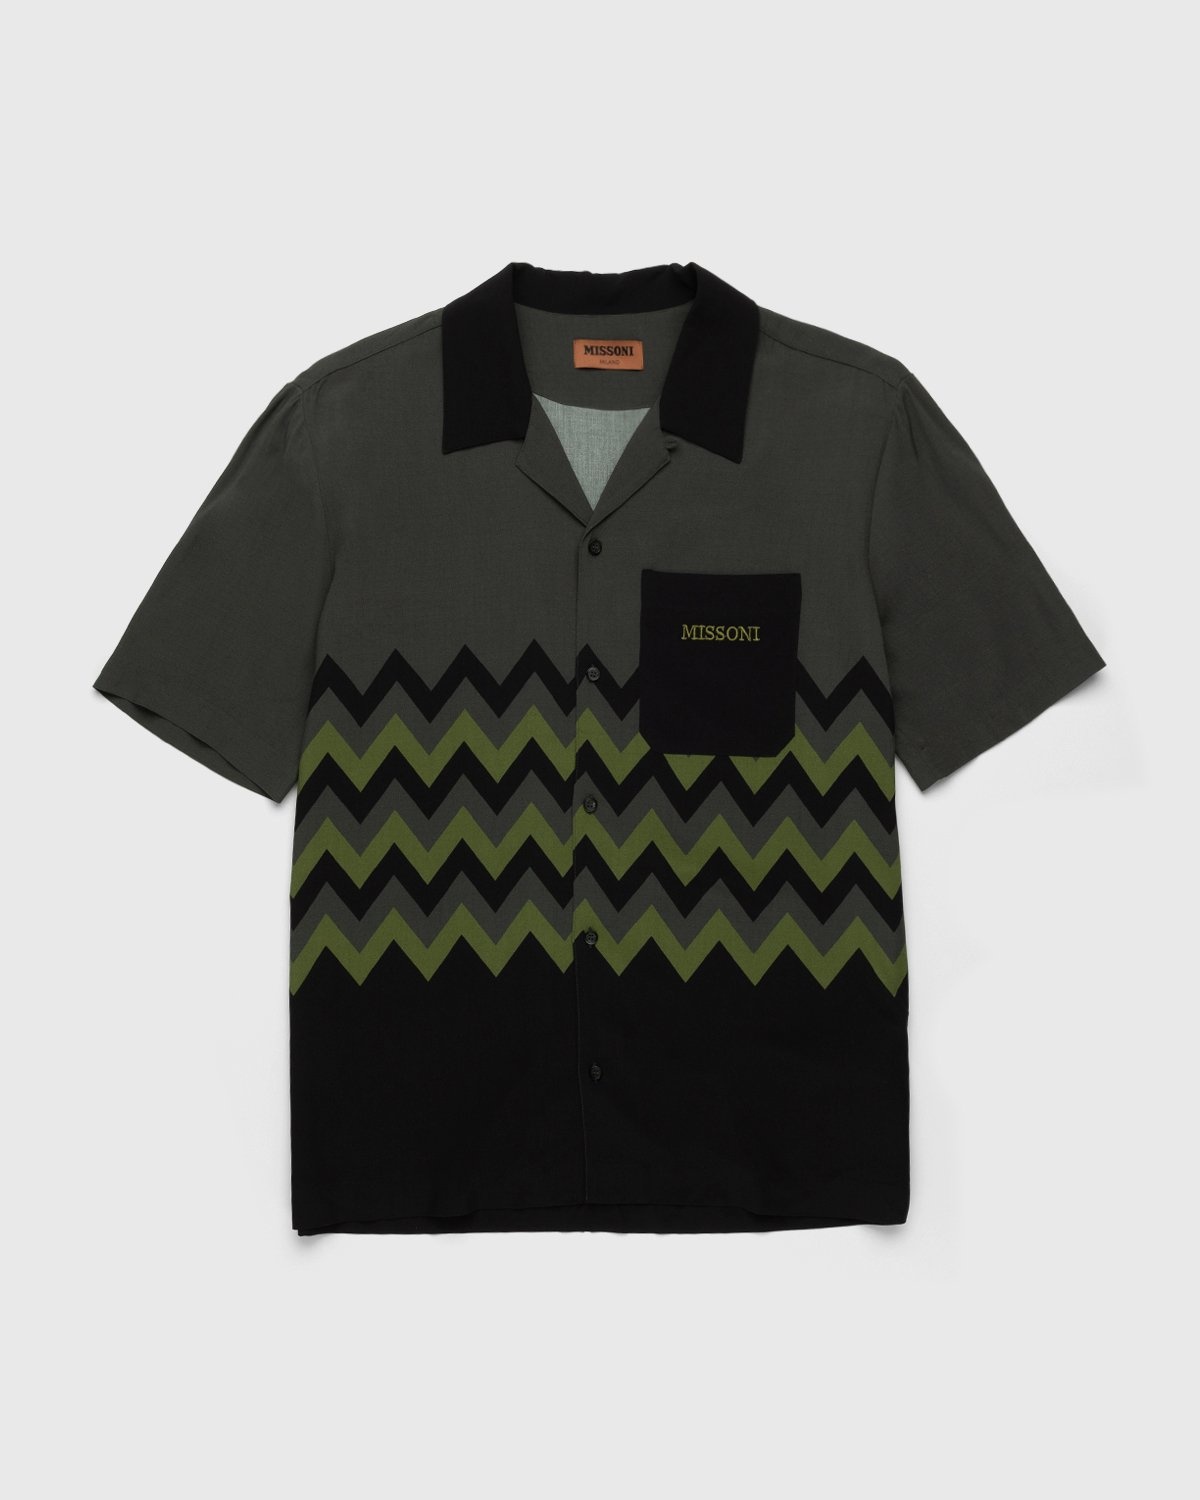 Missoni – Zig Zag Camp Shirt Green - T-shirts - Multi - Image 1